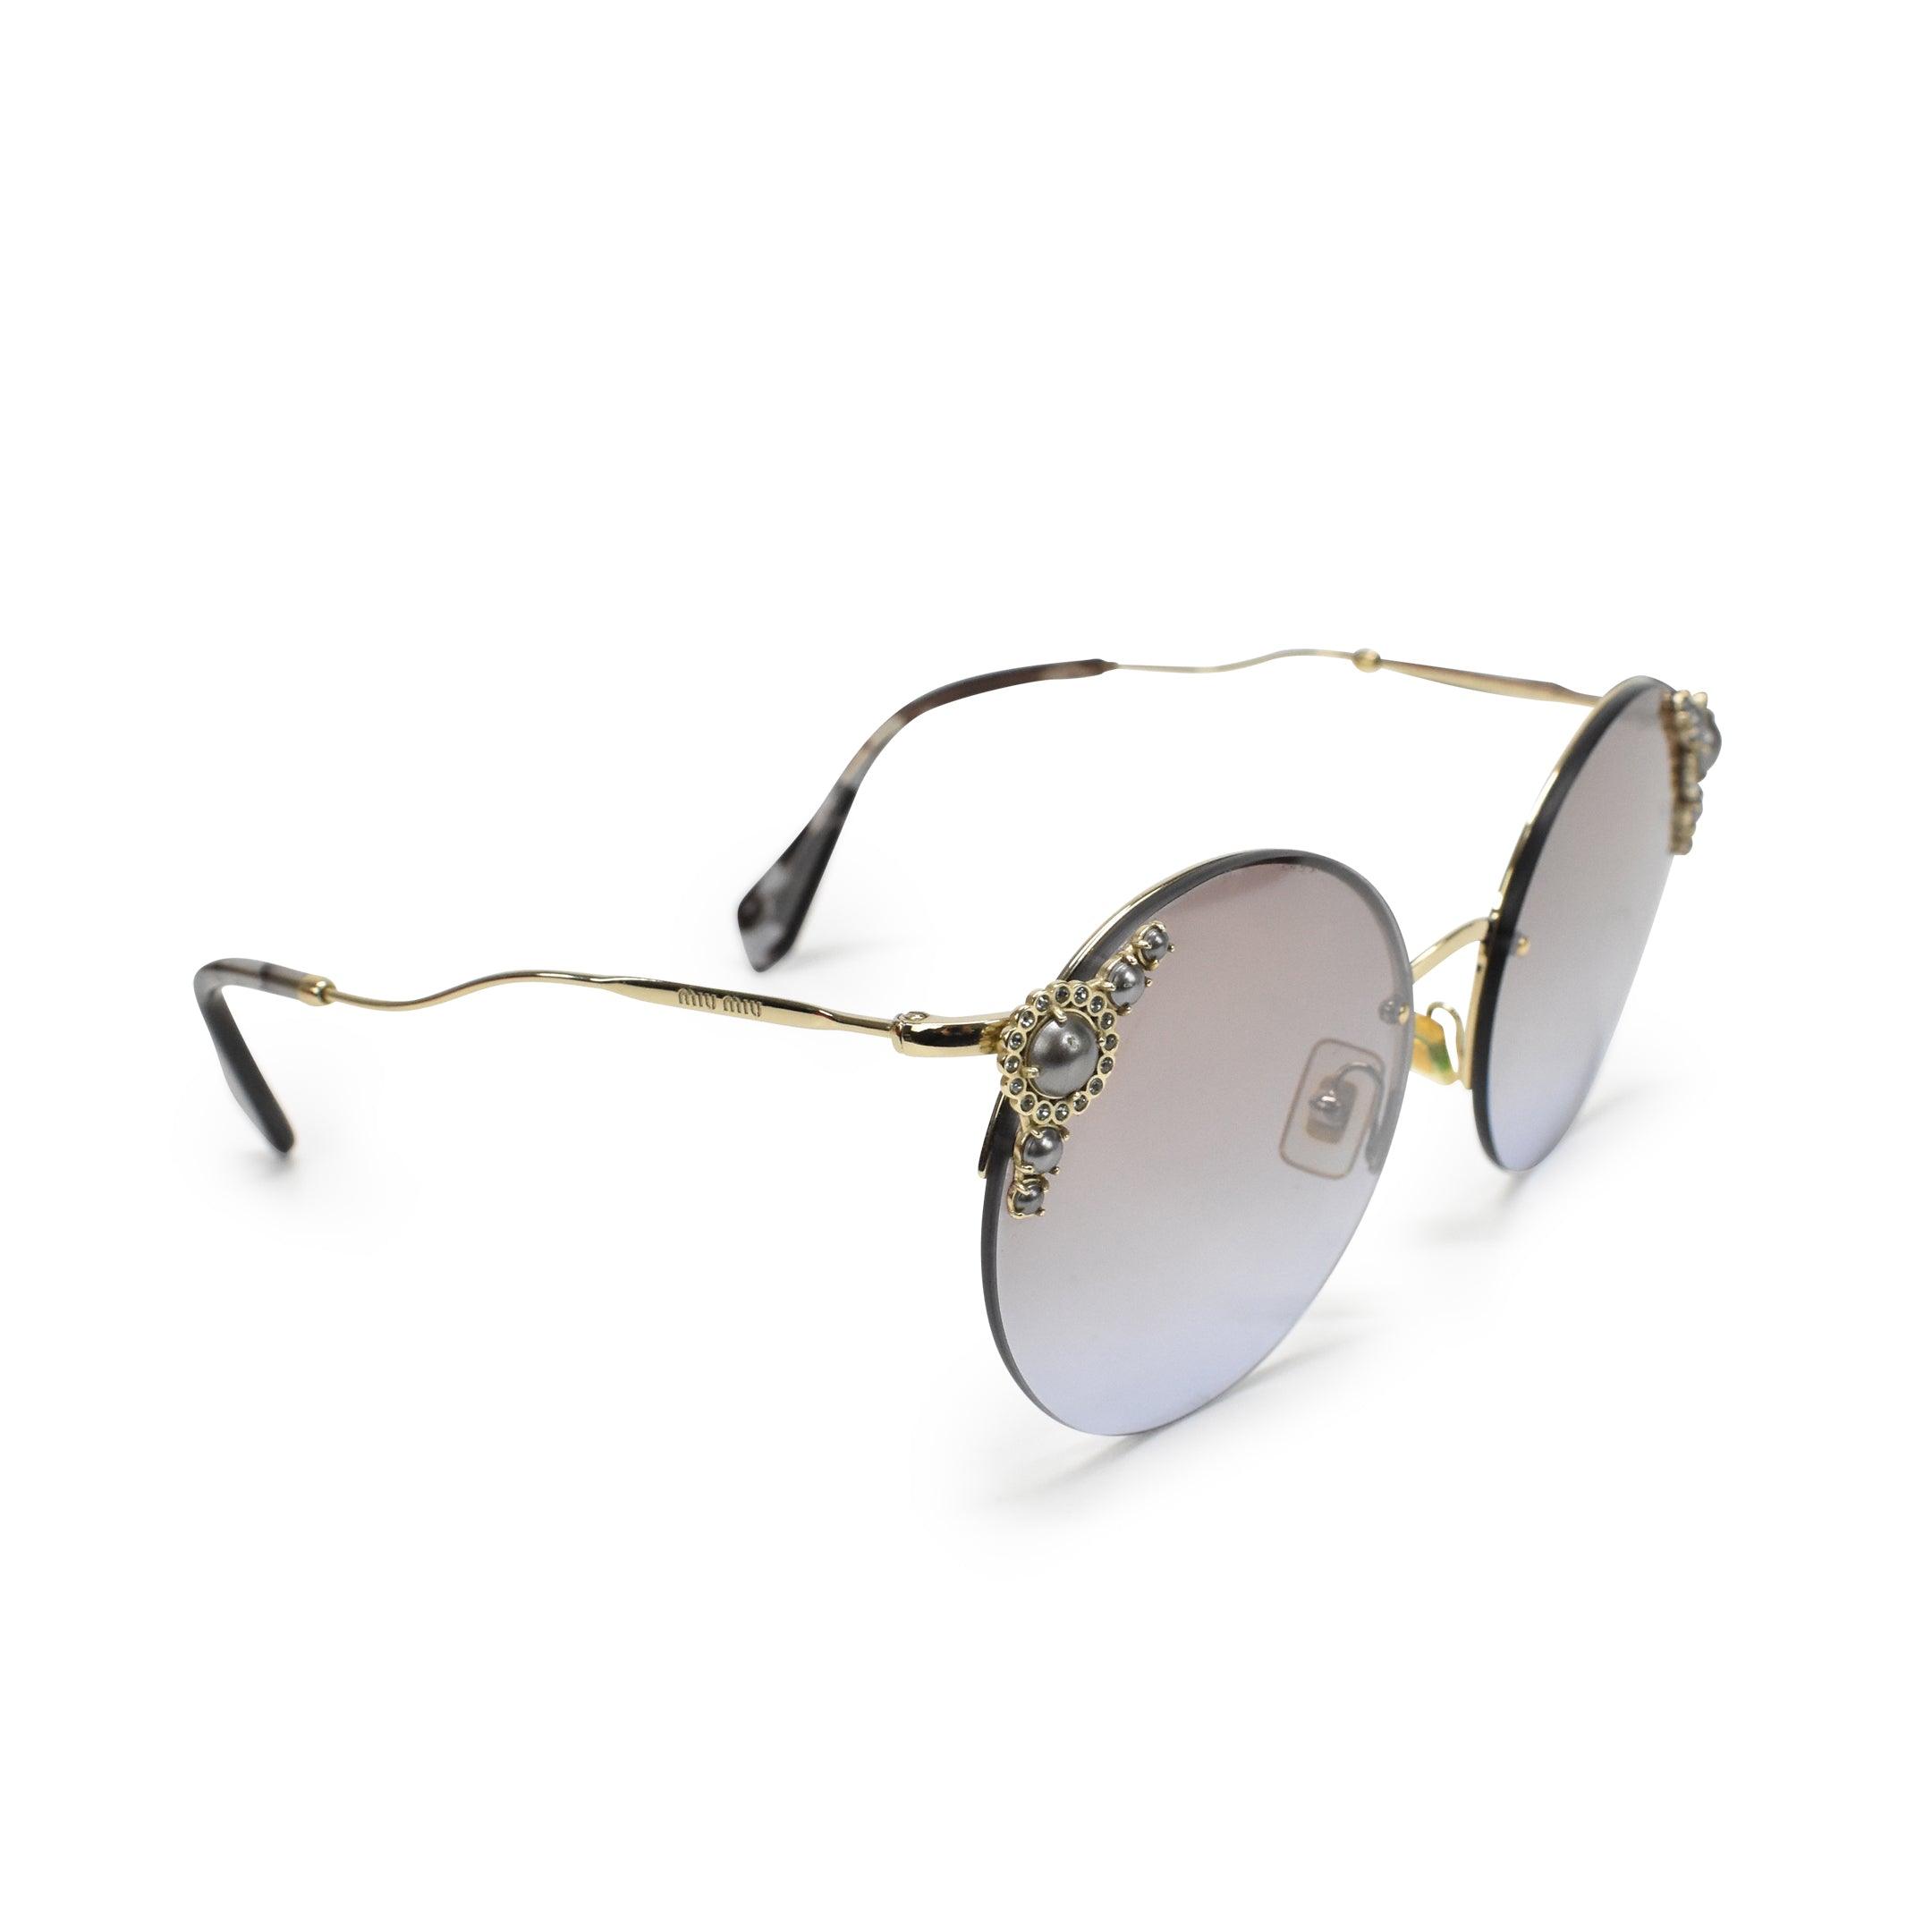 Miu Miu Embellished Sunglasses - Fashionably Yours